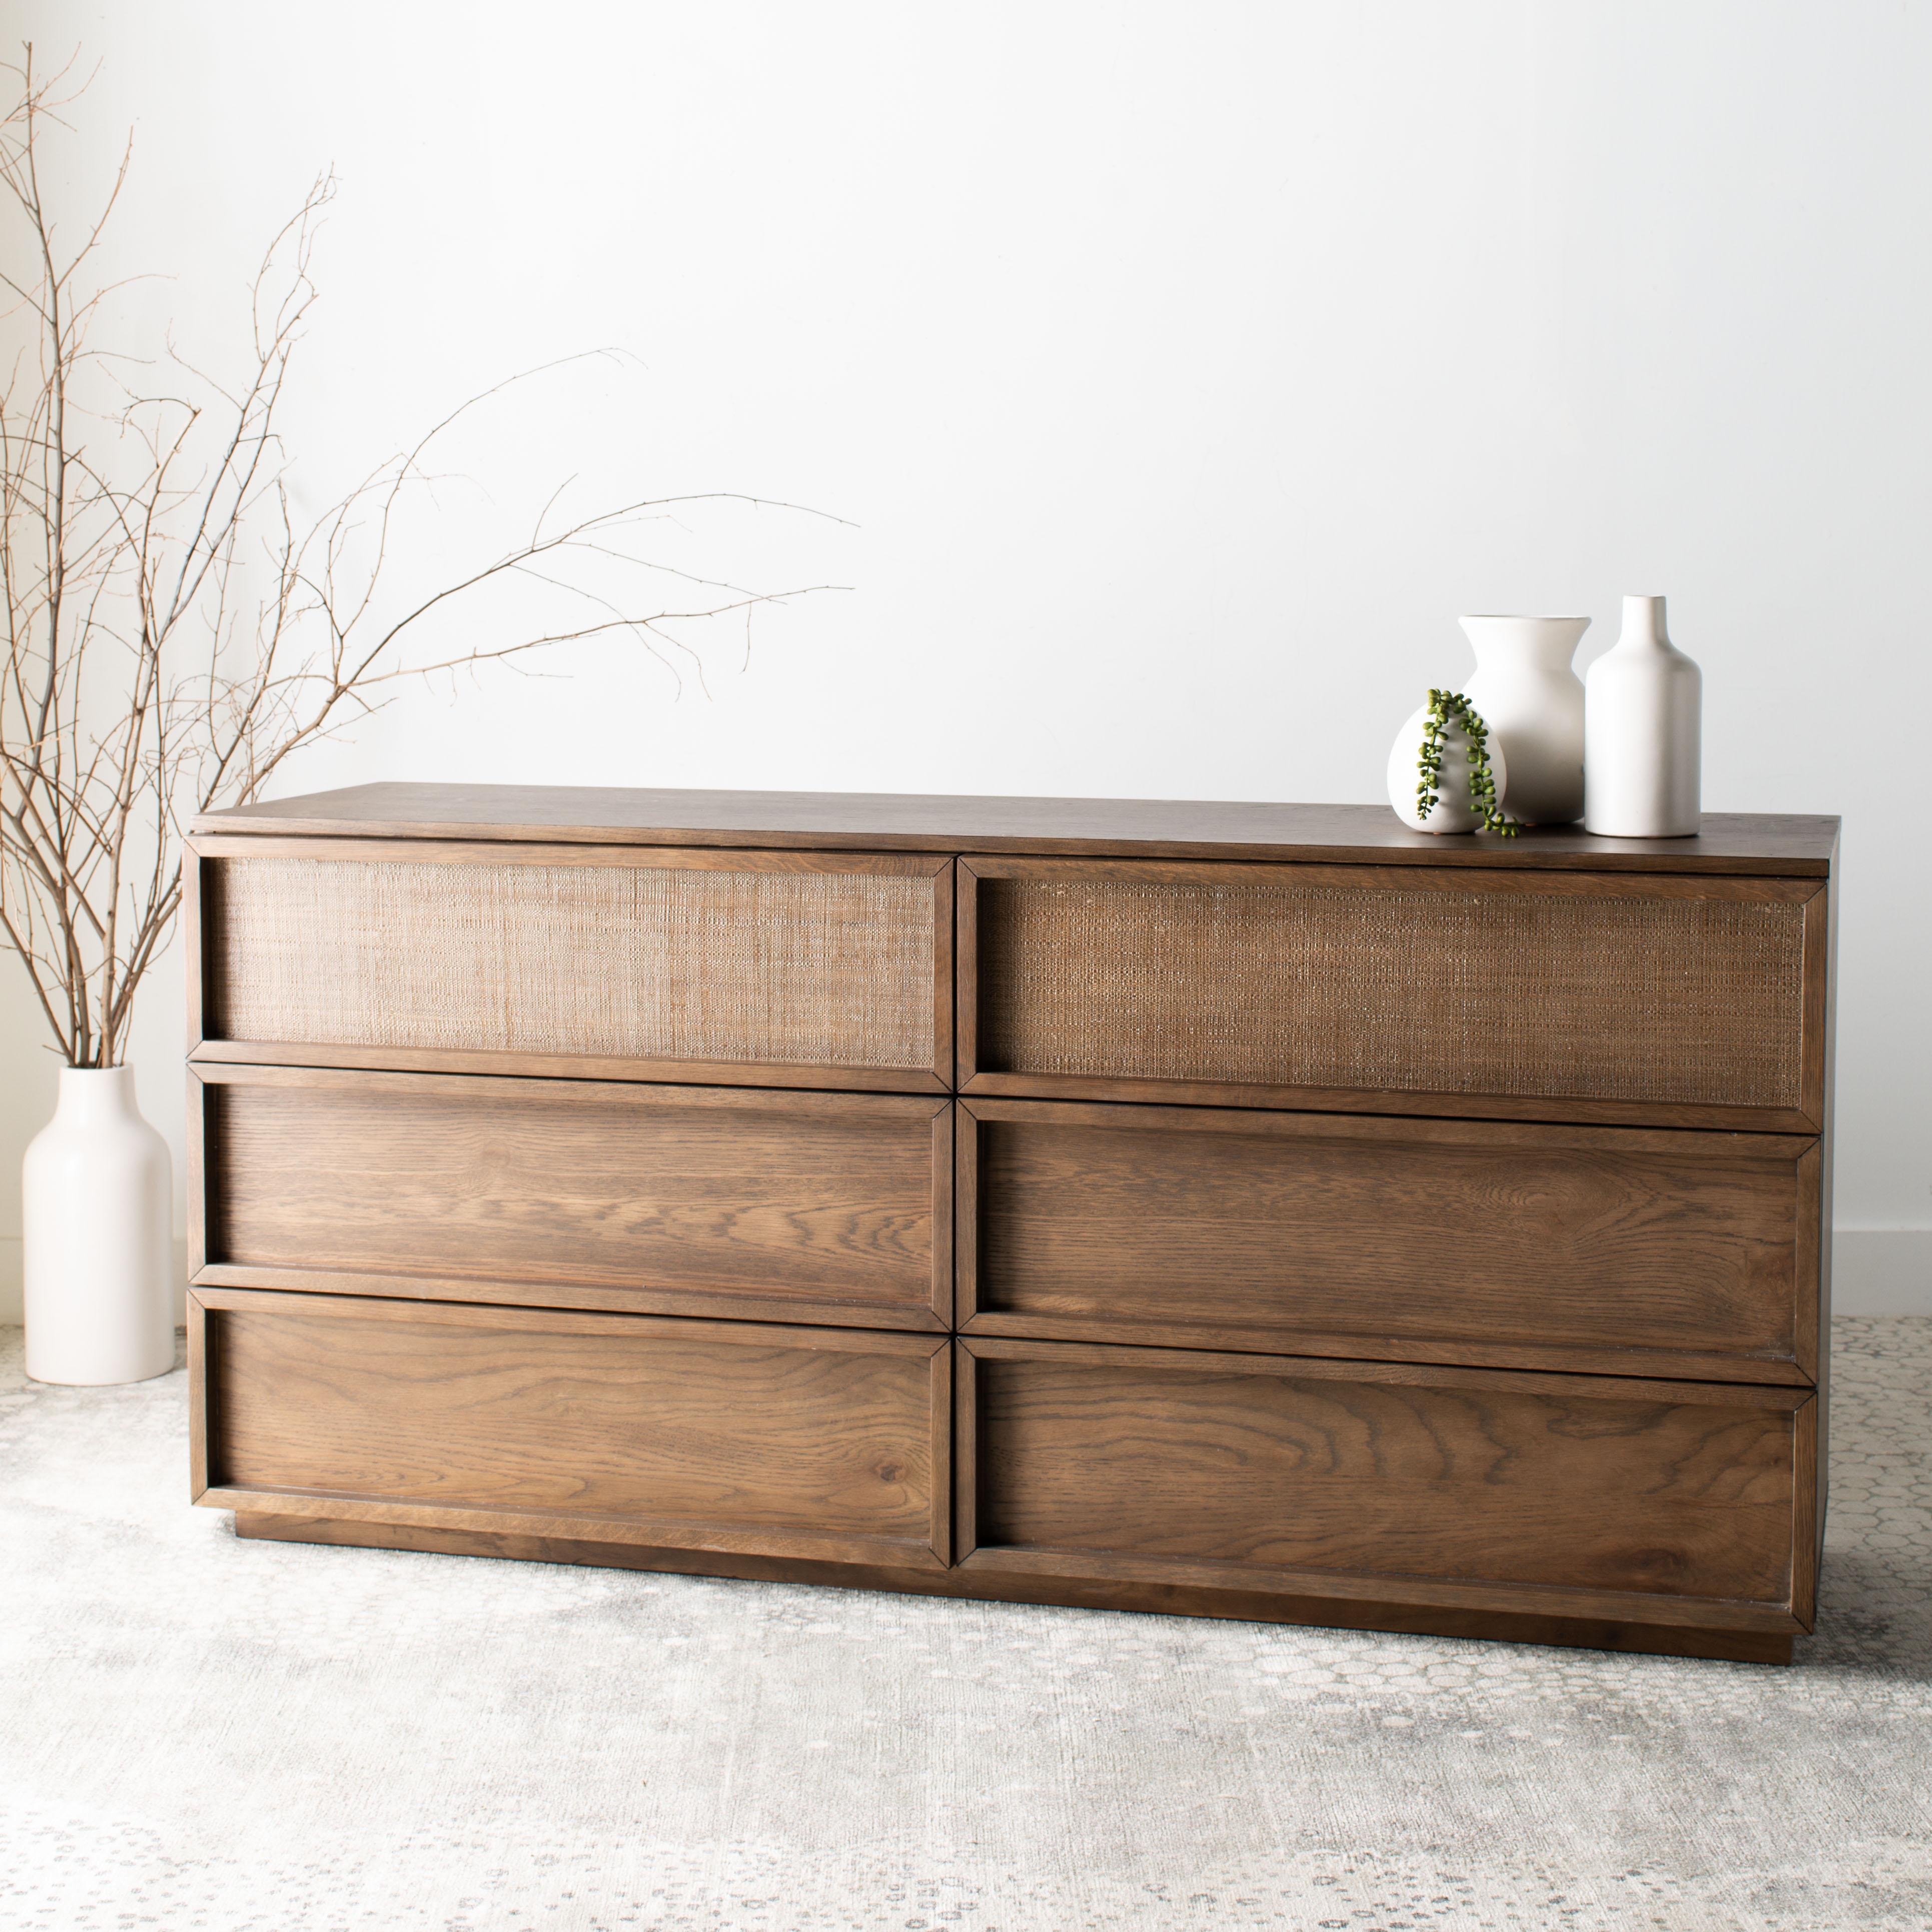 Varuna 6-Drawer Wood Dresser, Brown - Image 4